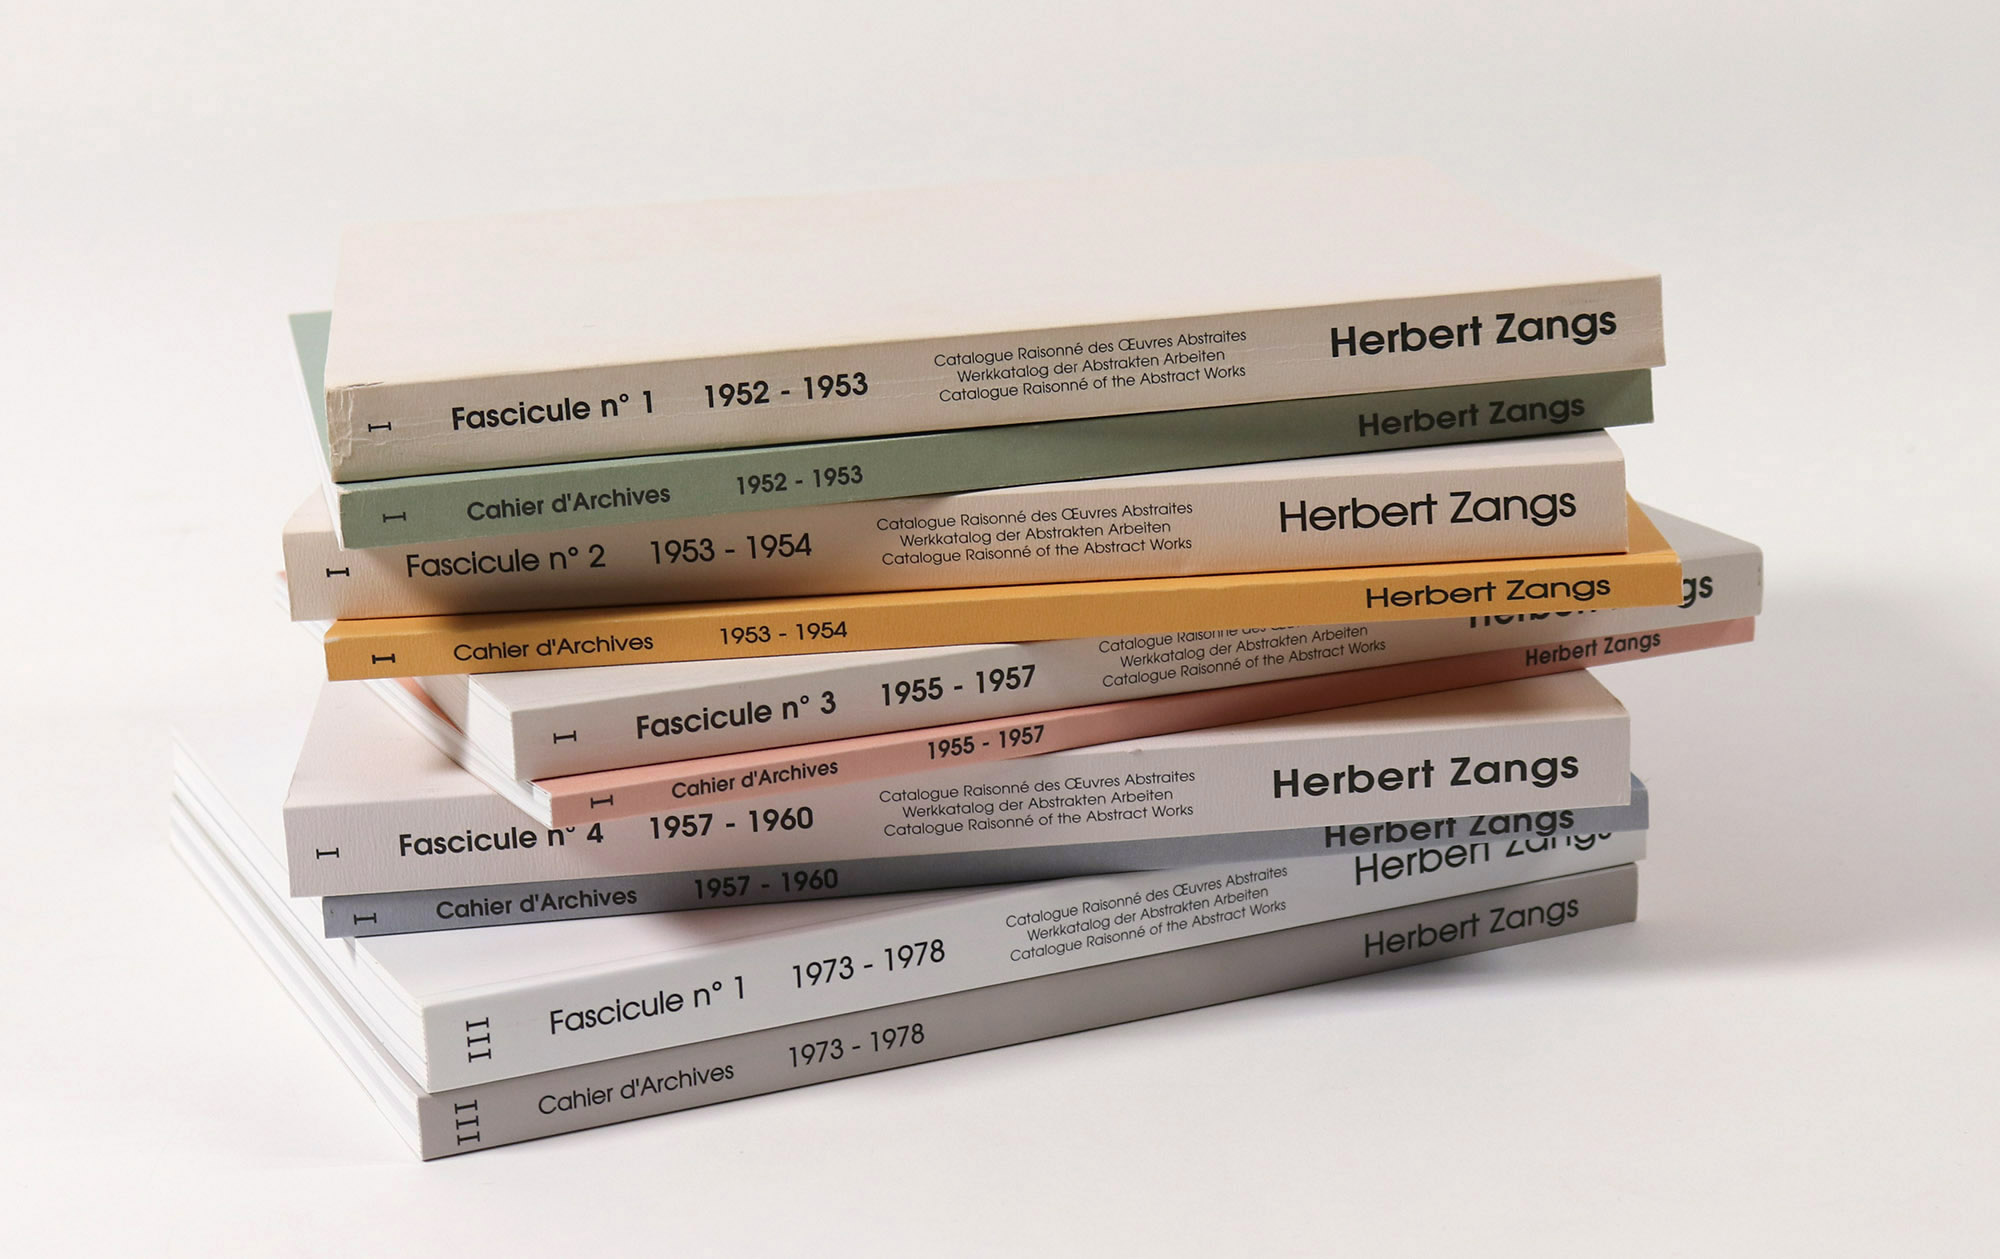 Herbert Zangs - Catalogue Raisonné (Werkkatalog) Tome I [Fascicule n°1-4 inkl. Cahier d'Archives] + III [Fascicule n°1 inkl. Cahier d'Archives]